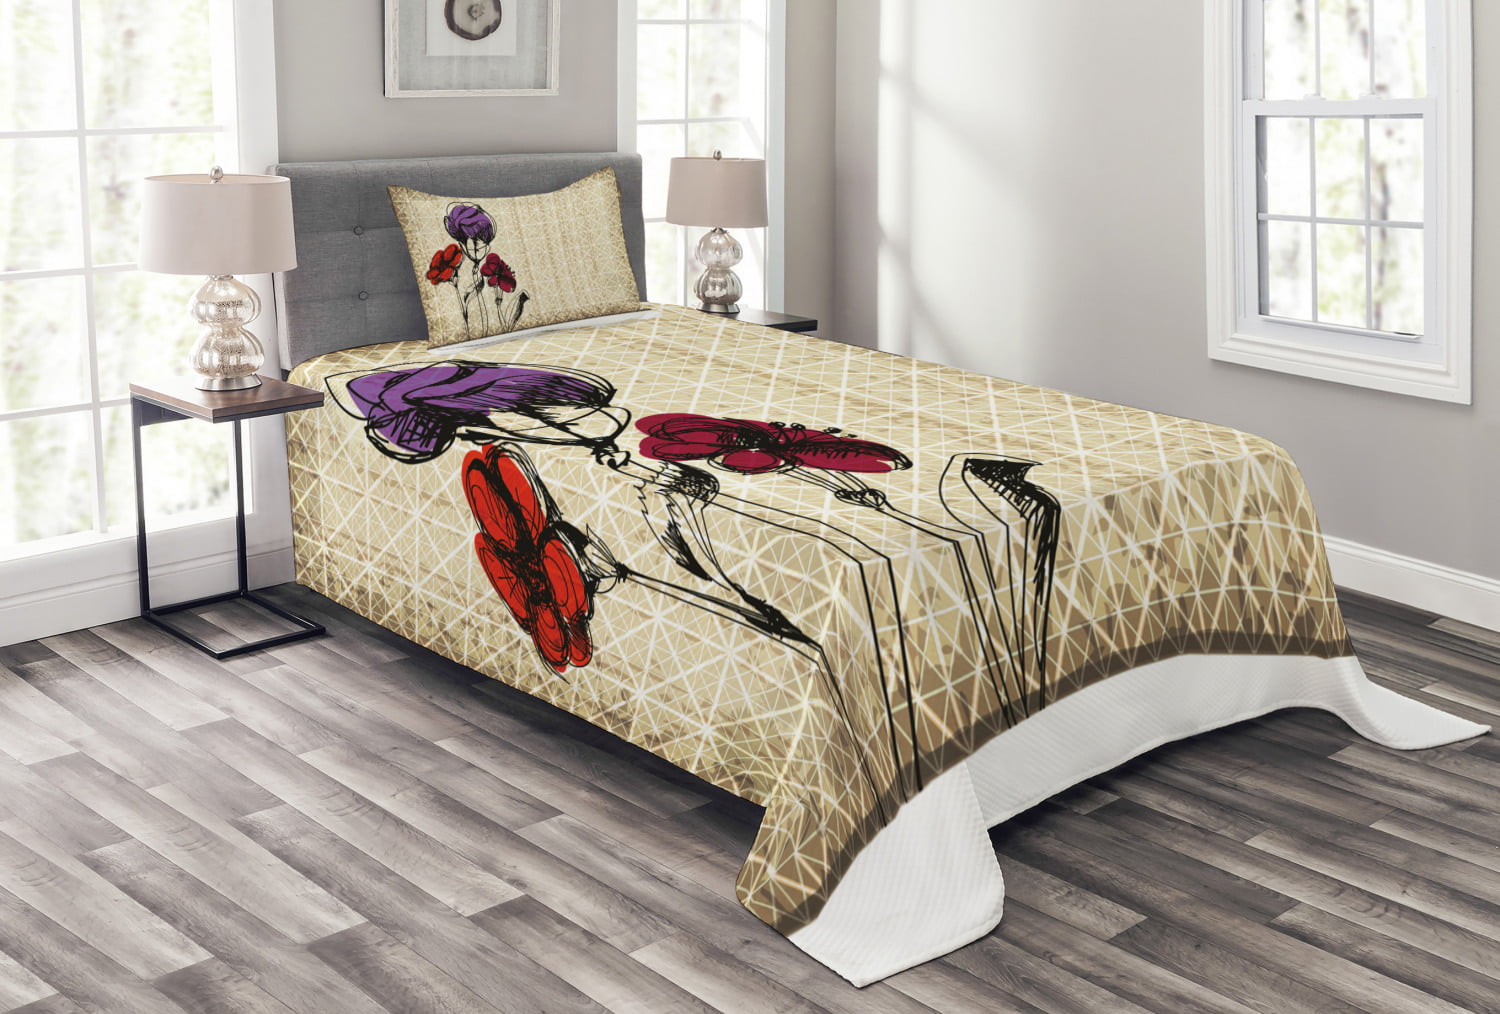 Details about   Sketchy Quilted Bedspread & Pillow Shams Set Flower Petals Grunge Print 